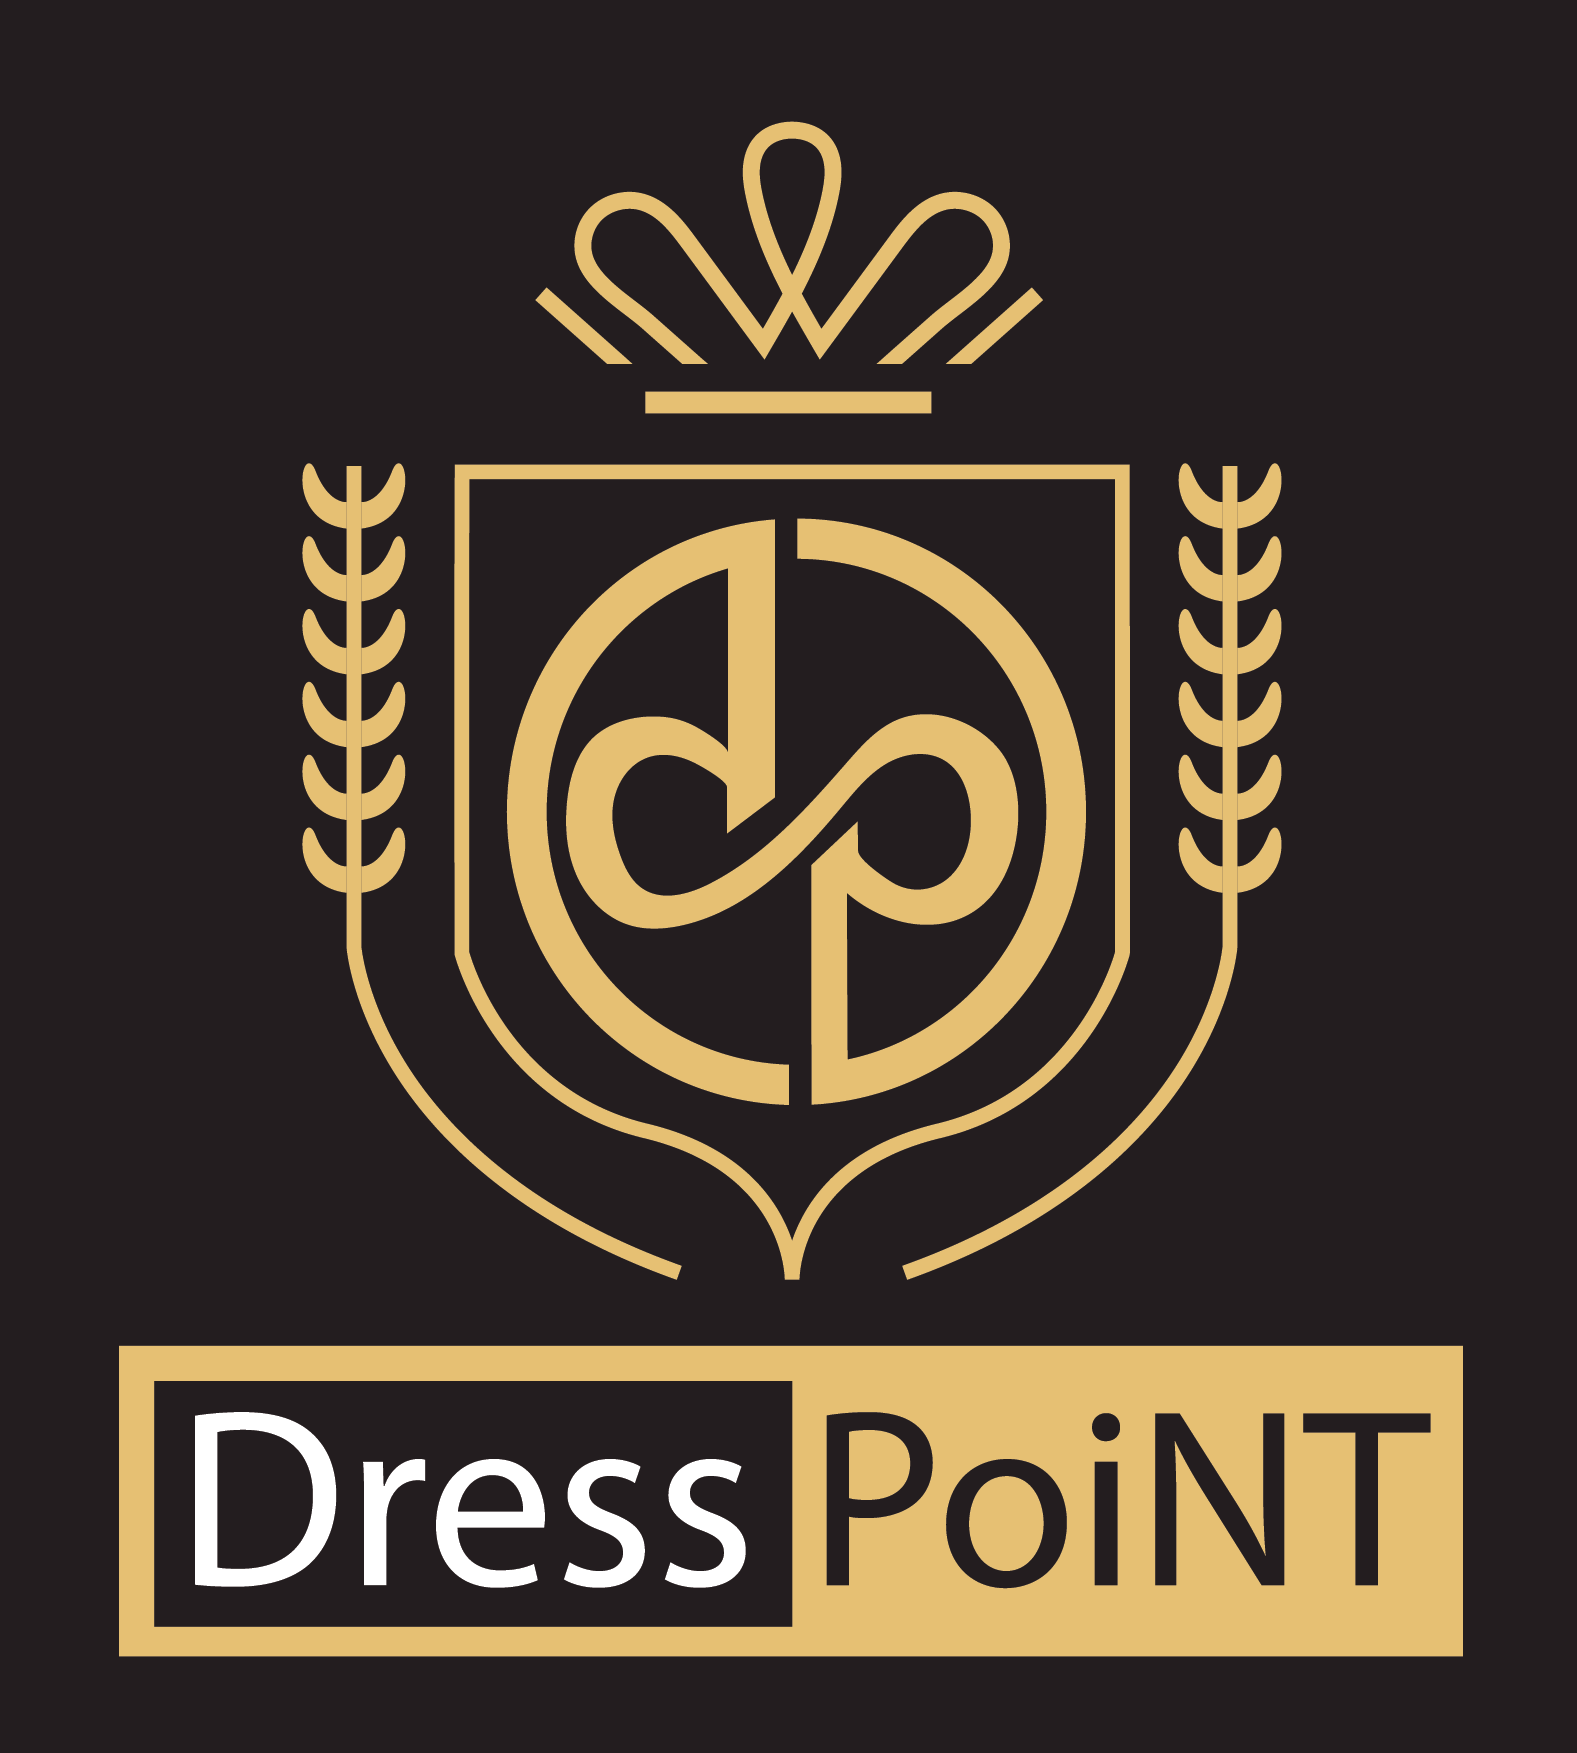 Dress Point